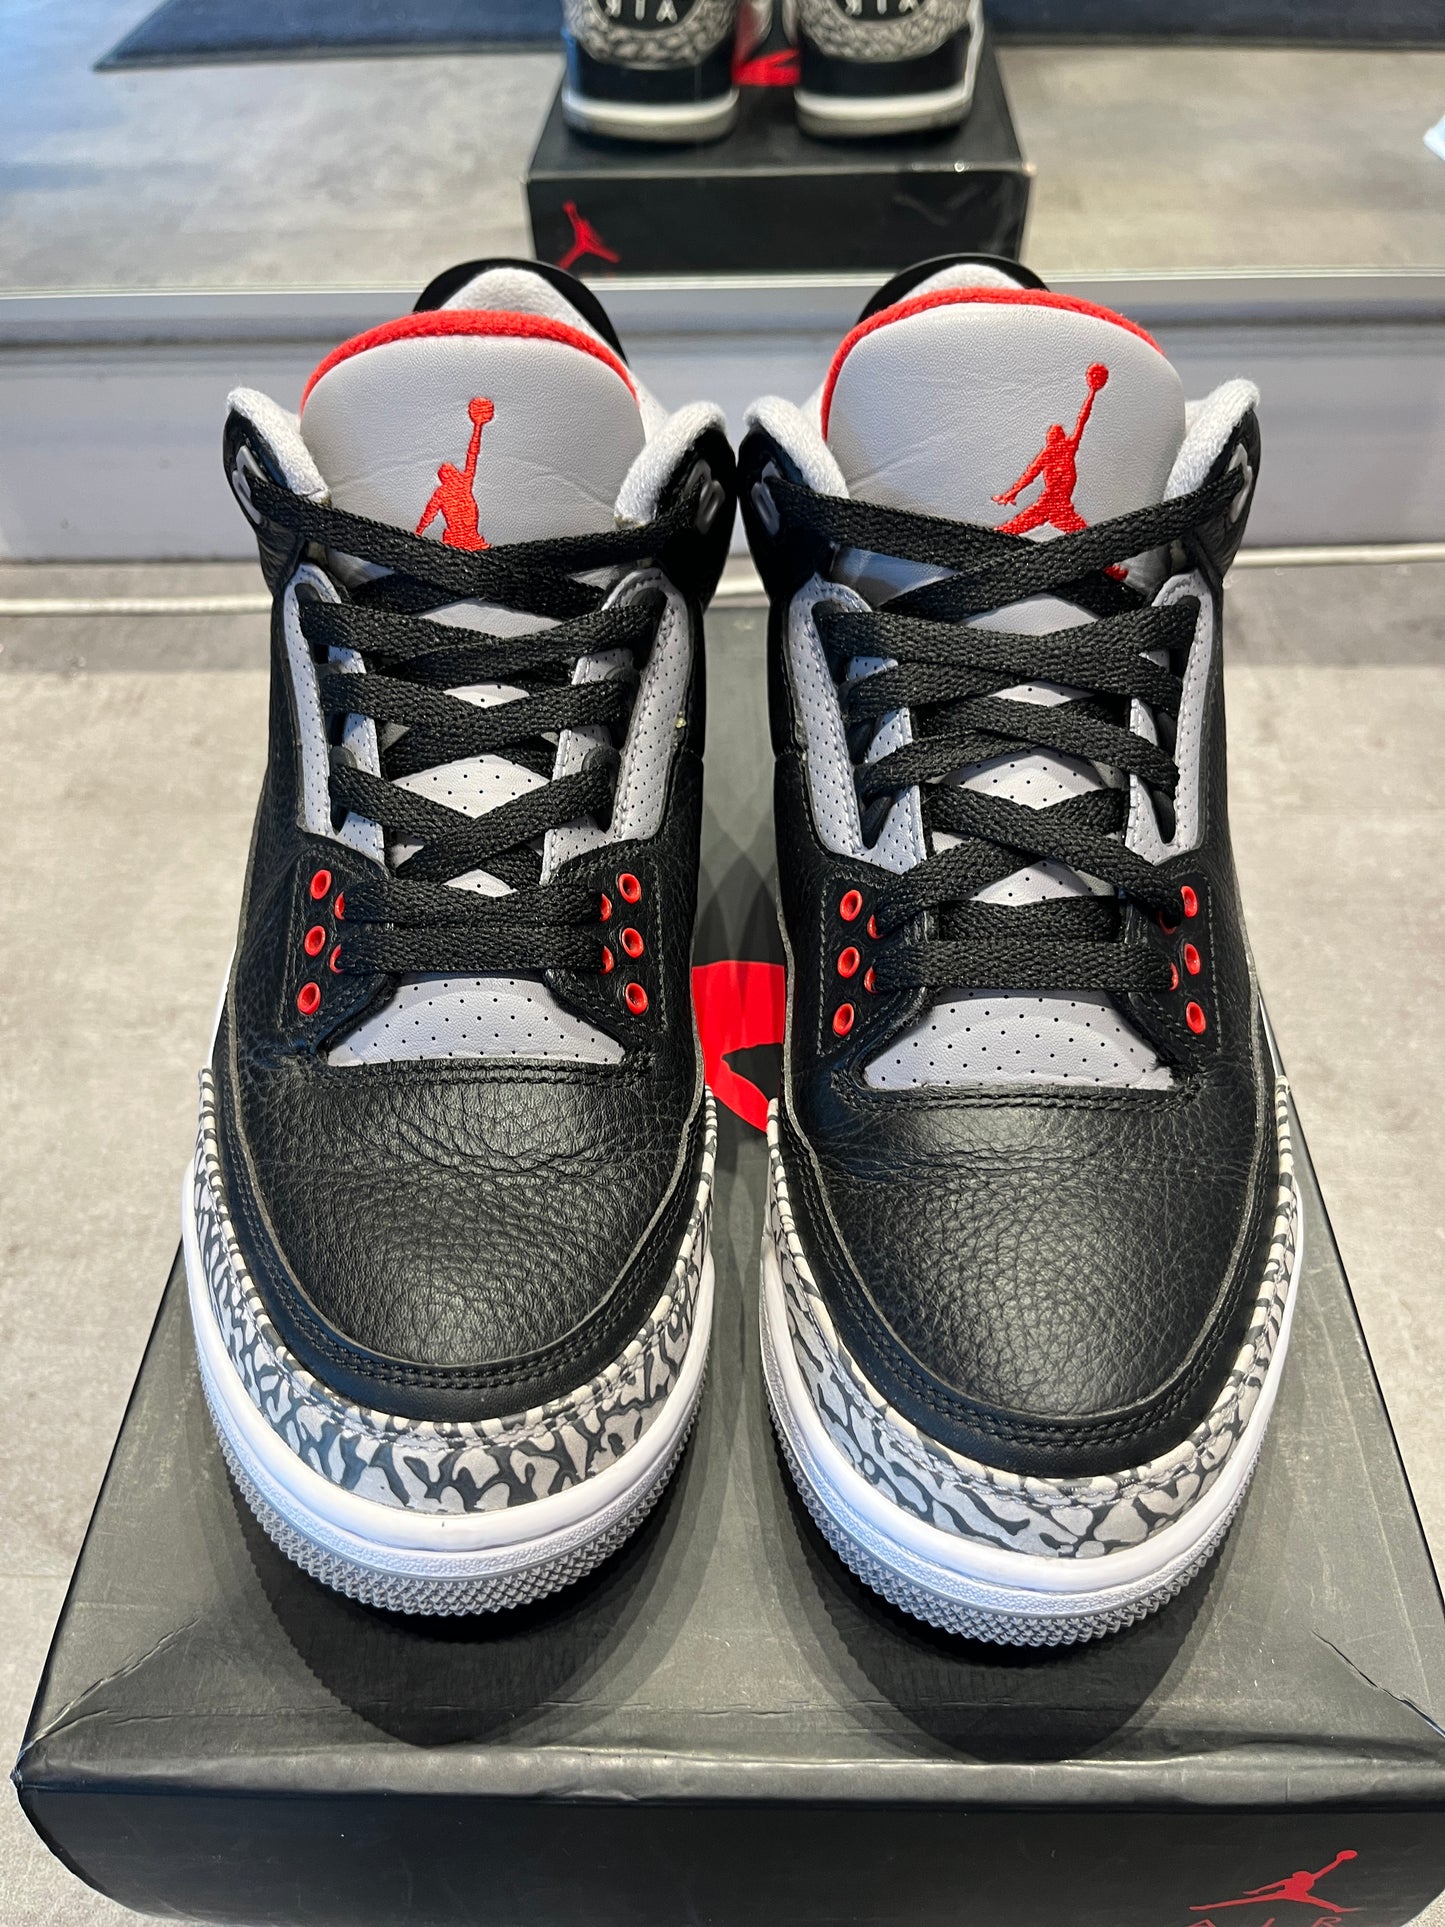 Jordan 3 Retro Black Cement (2018) (Preowned Size 9)